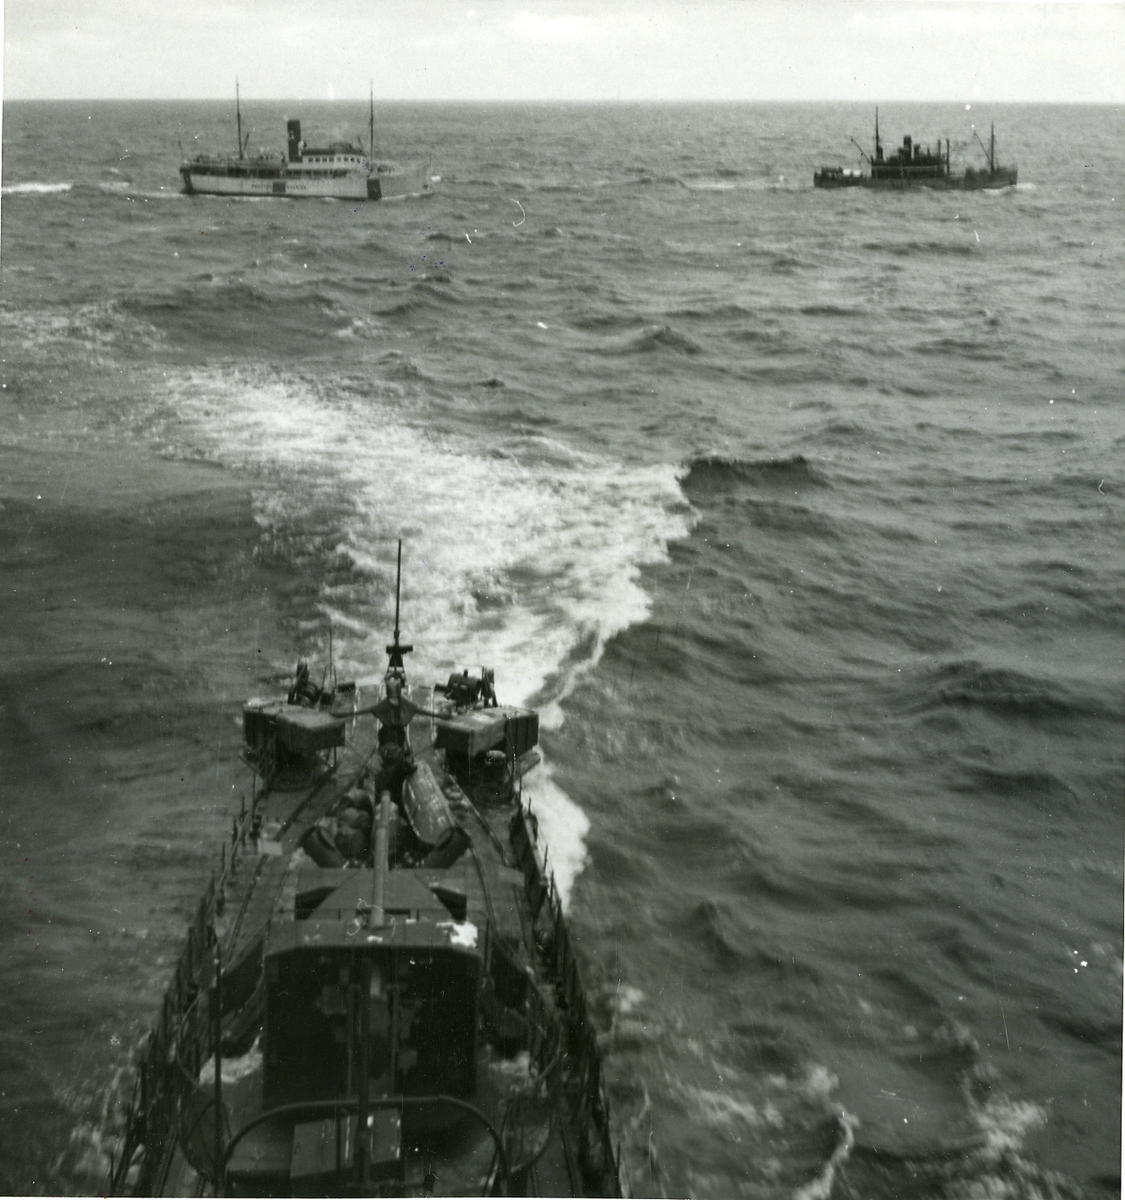 Jagaren Mjölner eskorterar två
Gotlandsfartyg.